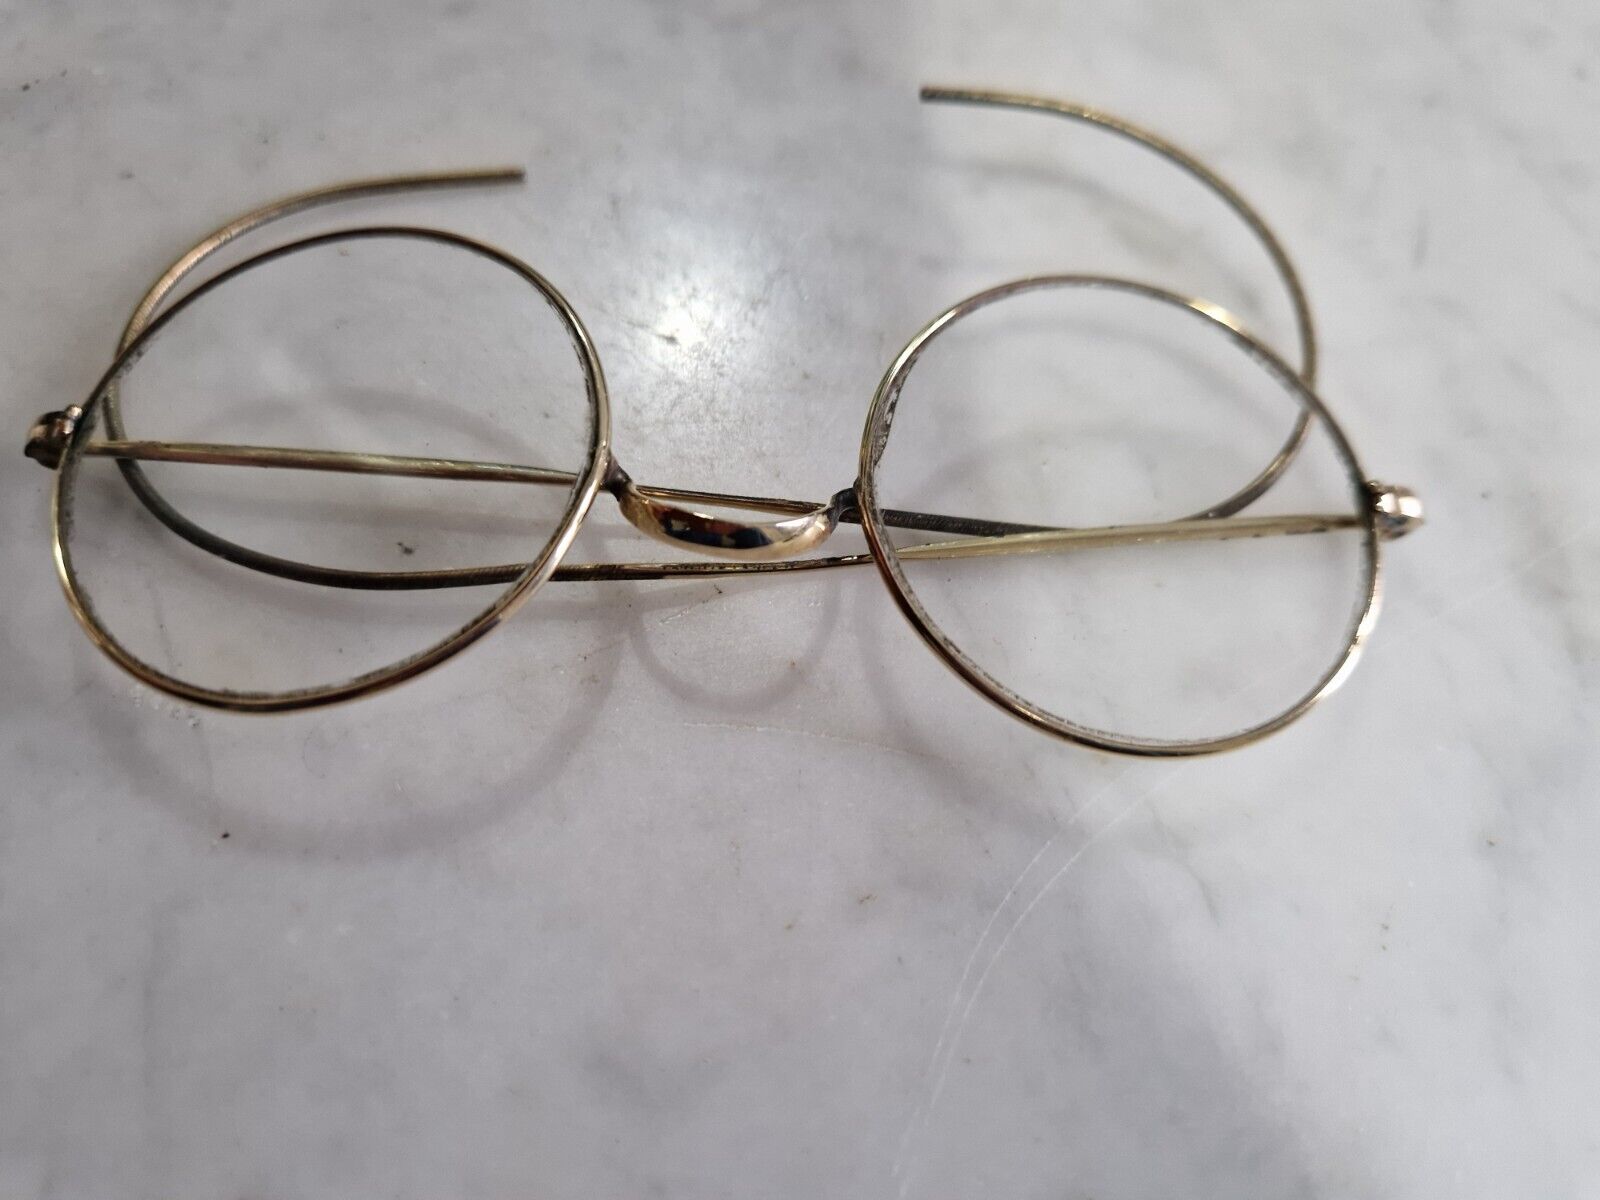 Antique Wire Spectacles Glasses Round Rims 1930s Art Deco 